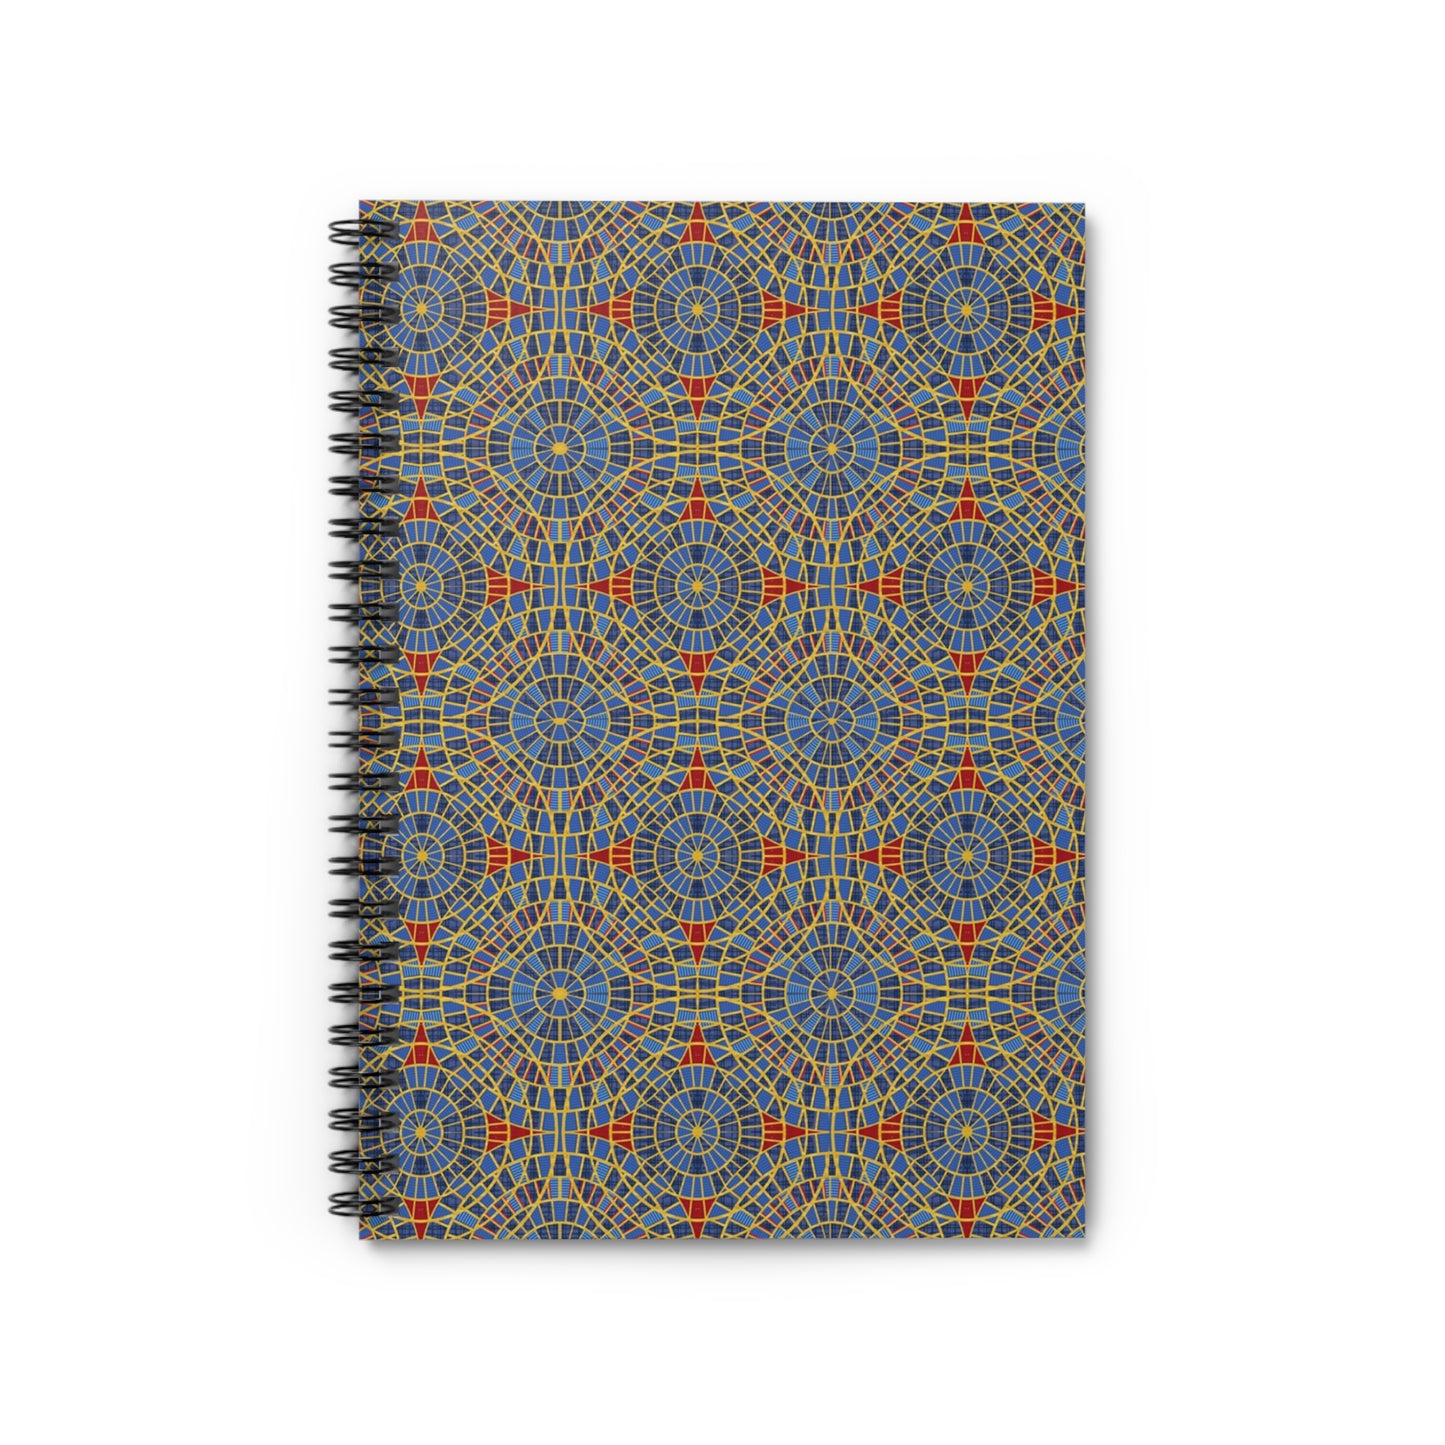 Carpet Cult notebook, Spiral Notebook - Ruled Line, notebook, note book, marriott carpet, carpet notebook, dragon con, carpet cult,